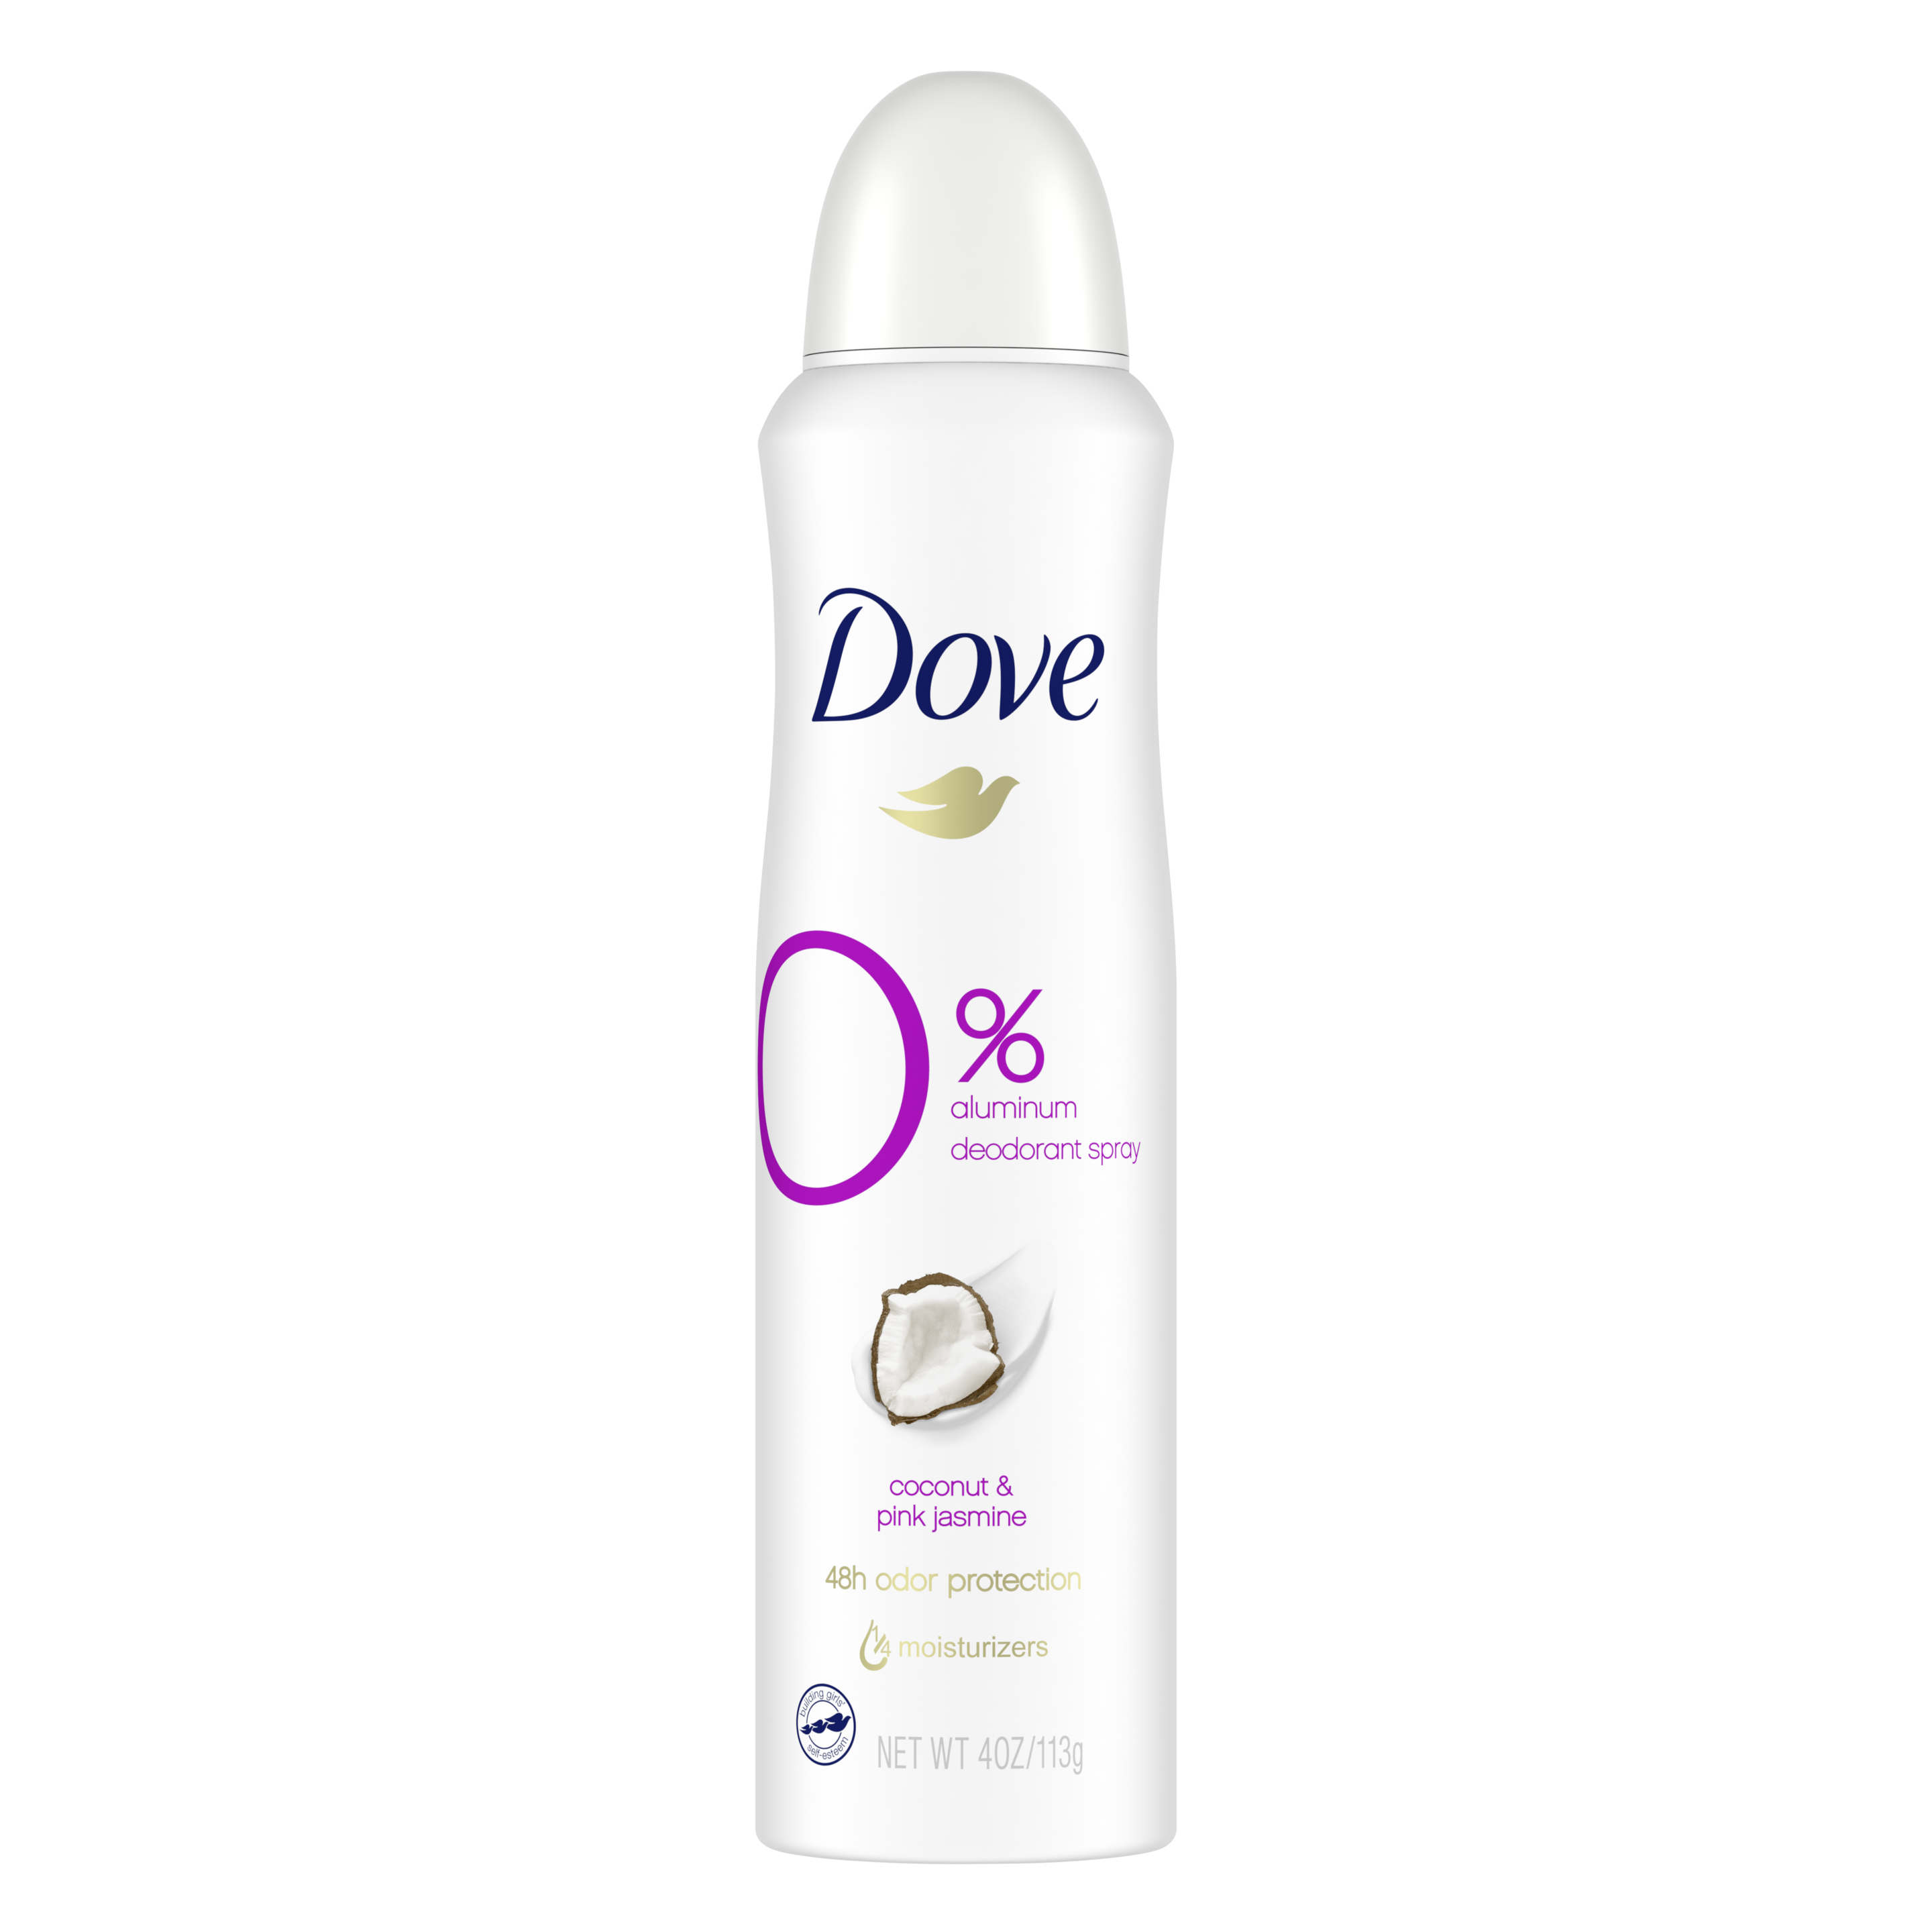 Dove 0% Aluminum Deodorant Spray Coconut & Pink Jasmine